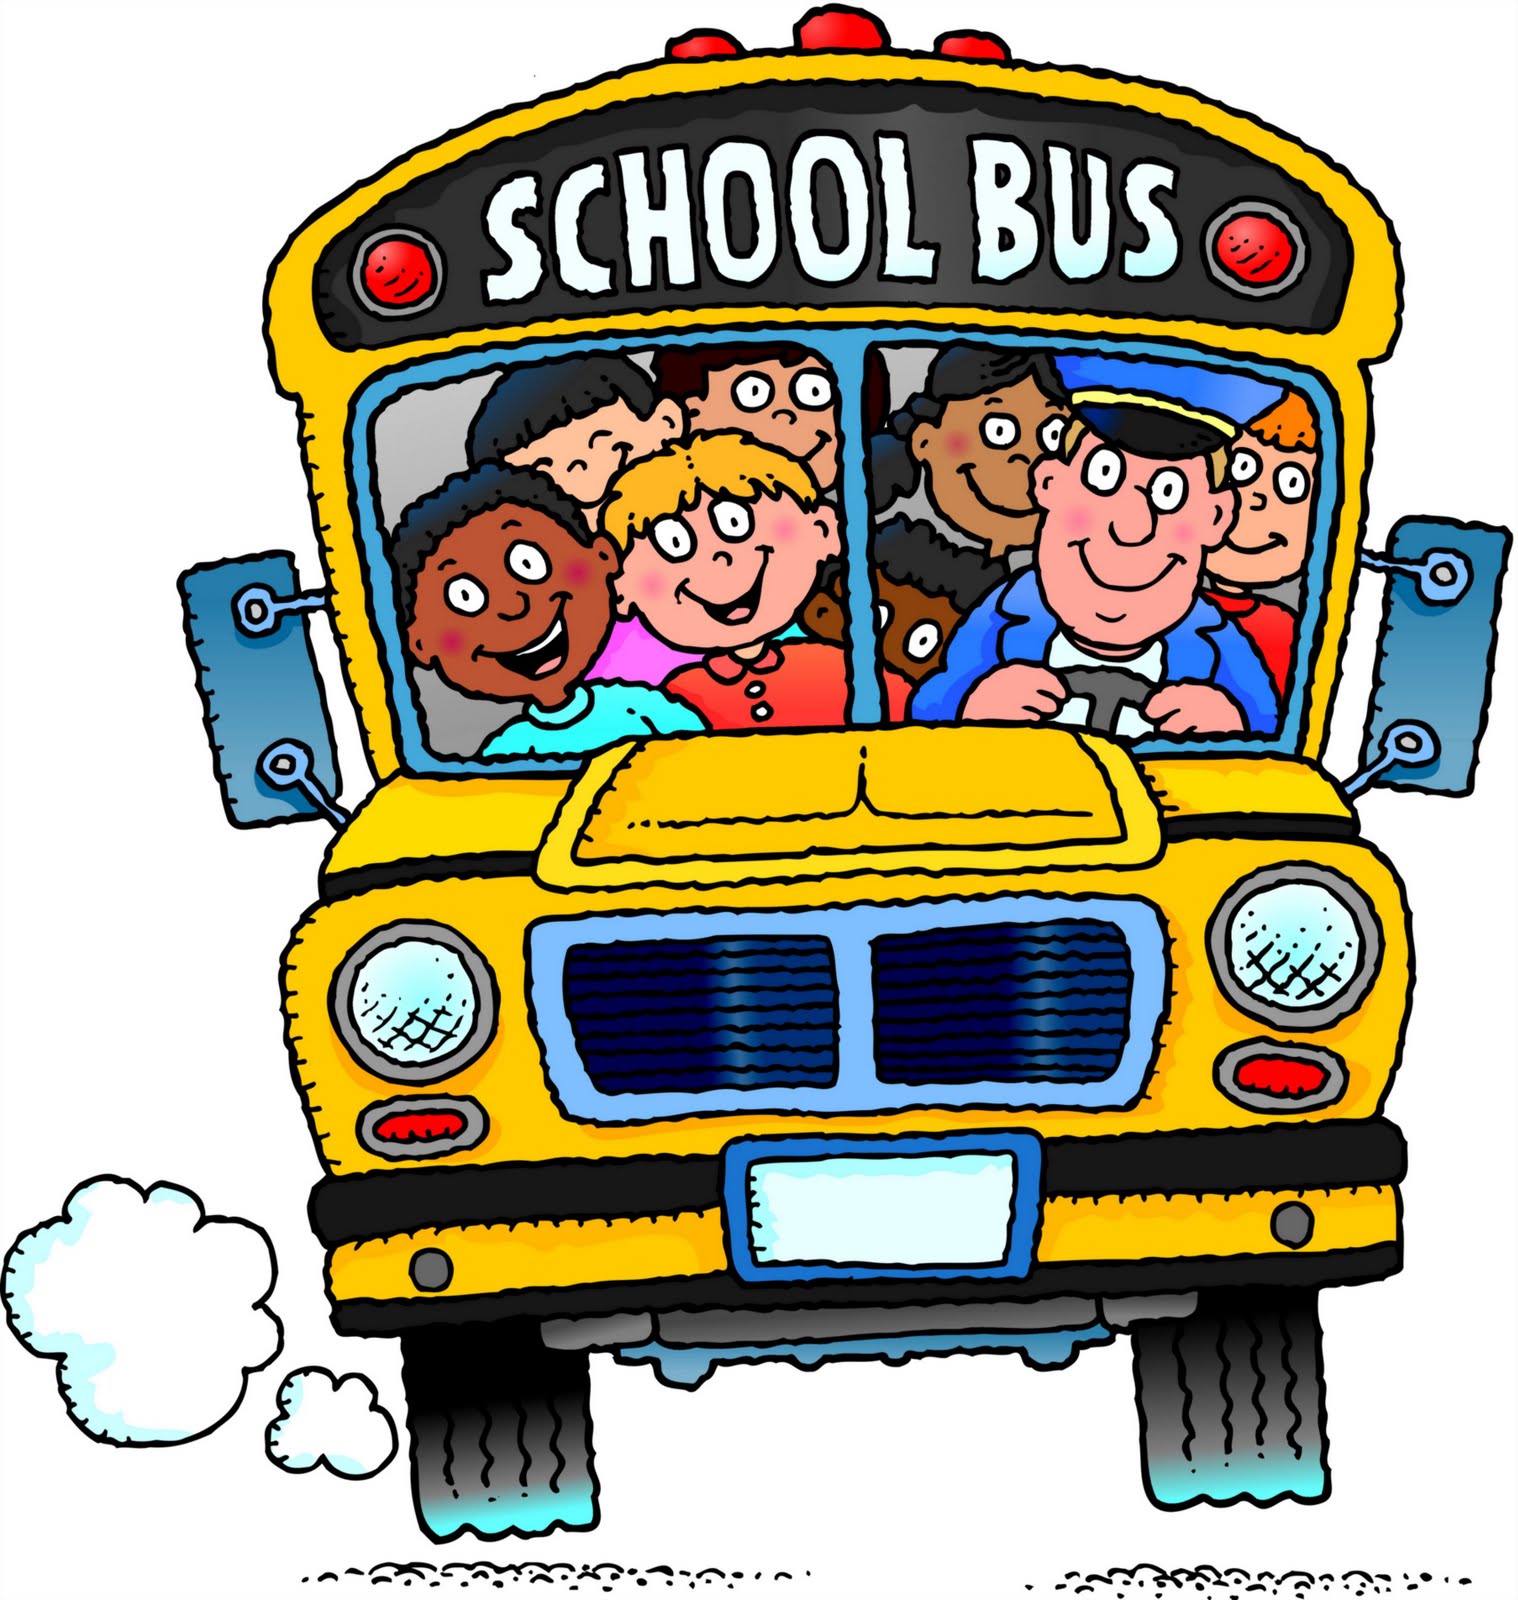 School bus image clipart - Schoolbus Clipart